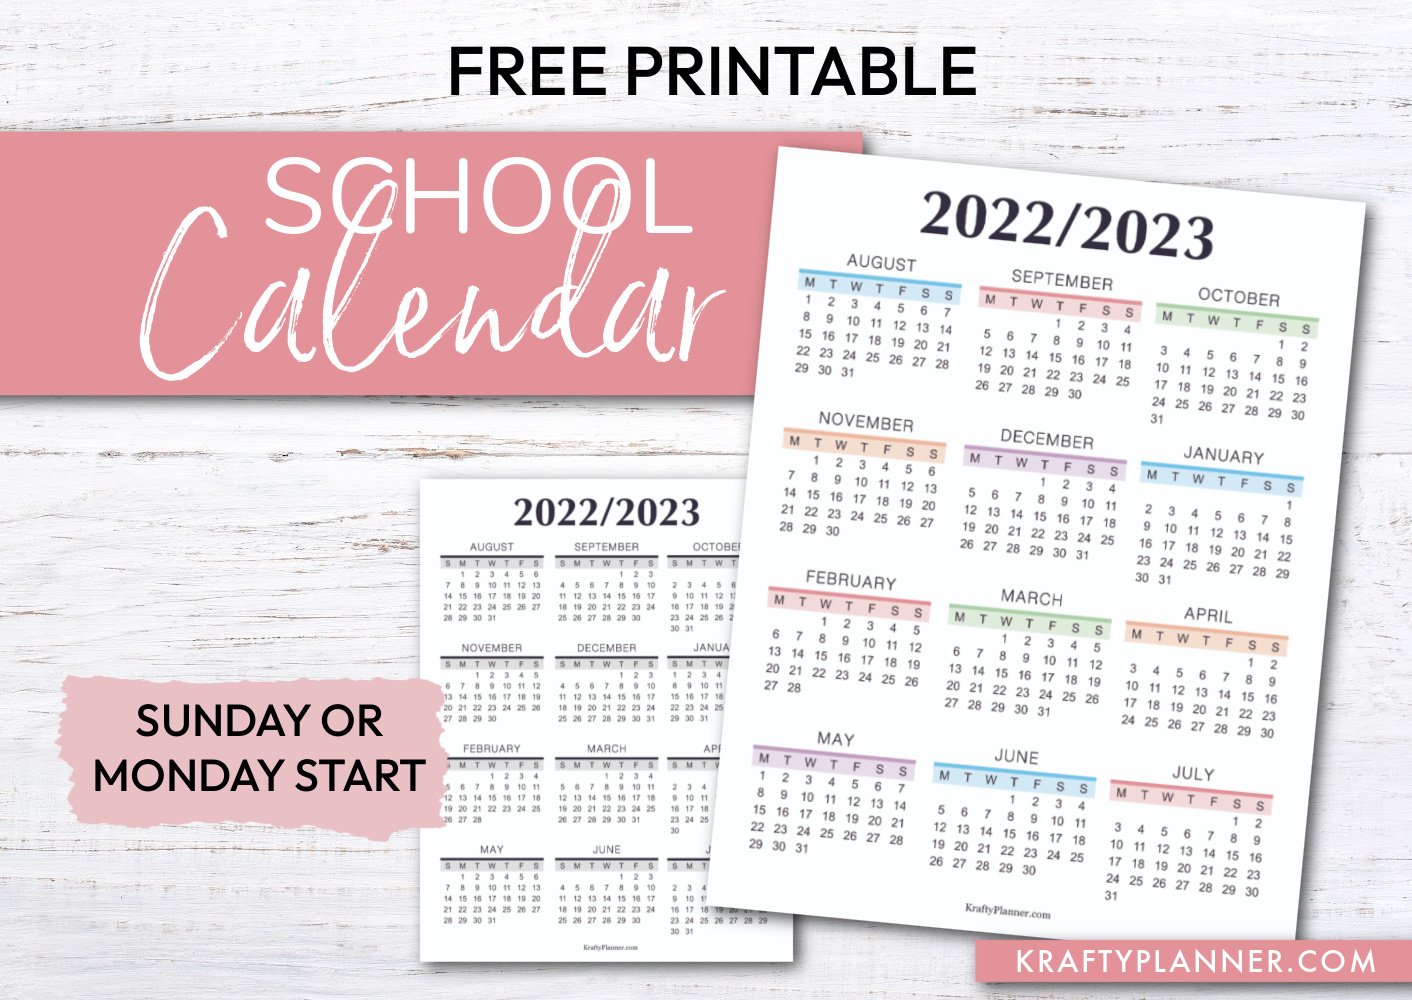 Free Printable Year at a Glance School Calendar {22/23}